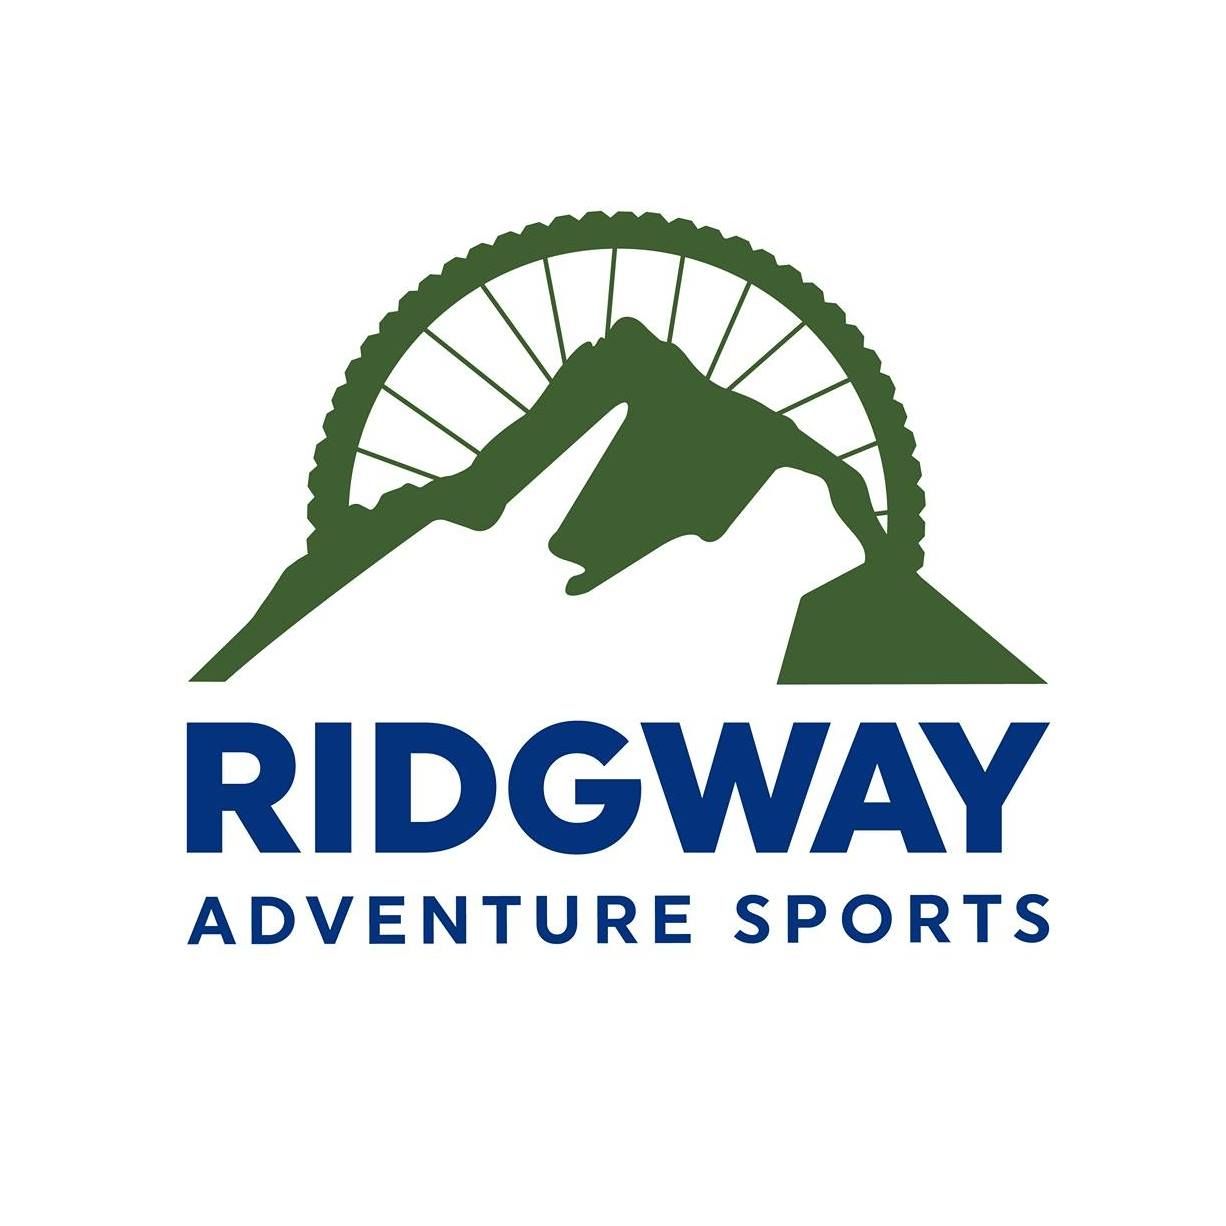 Ridgway Adventure Sports